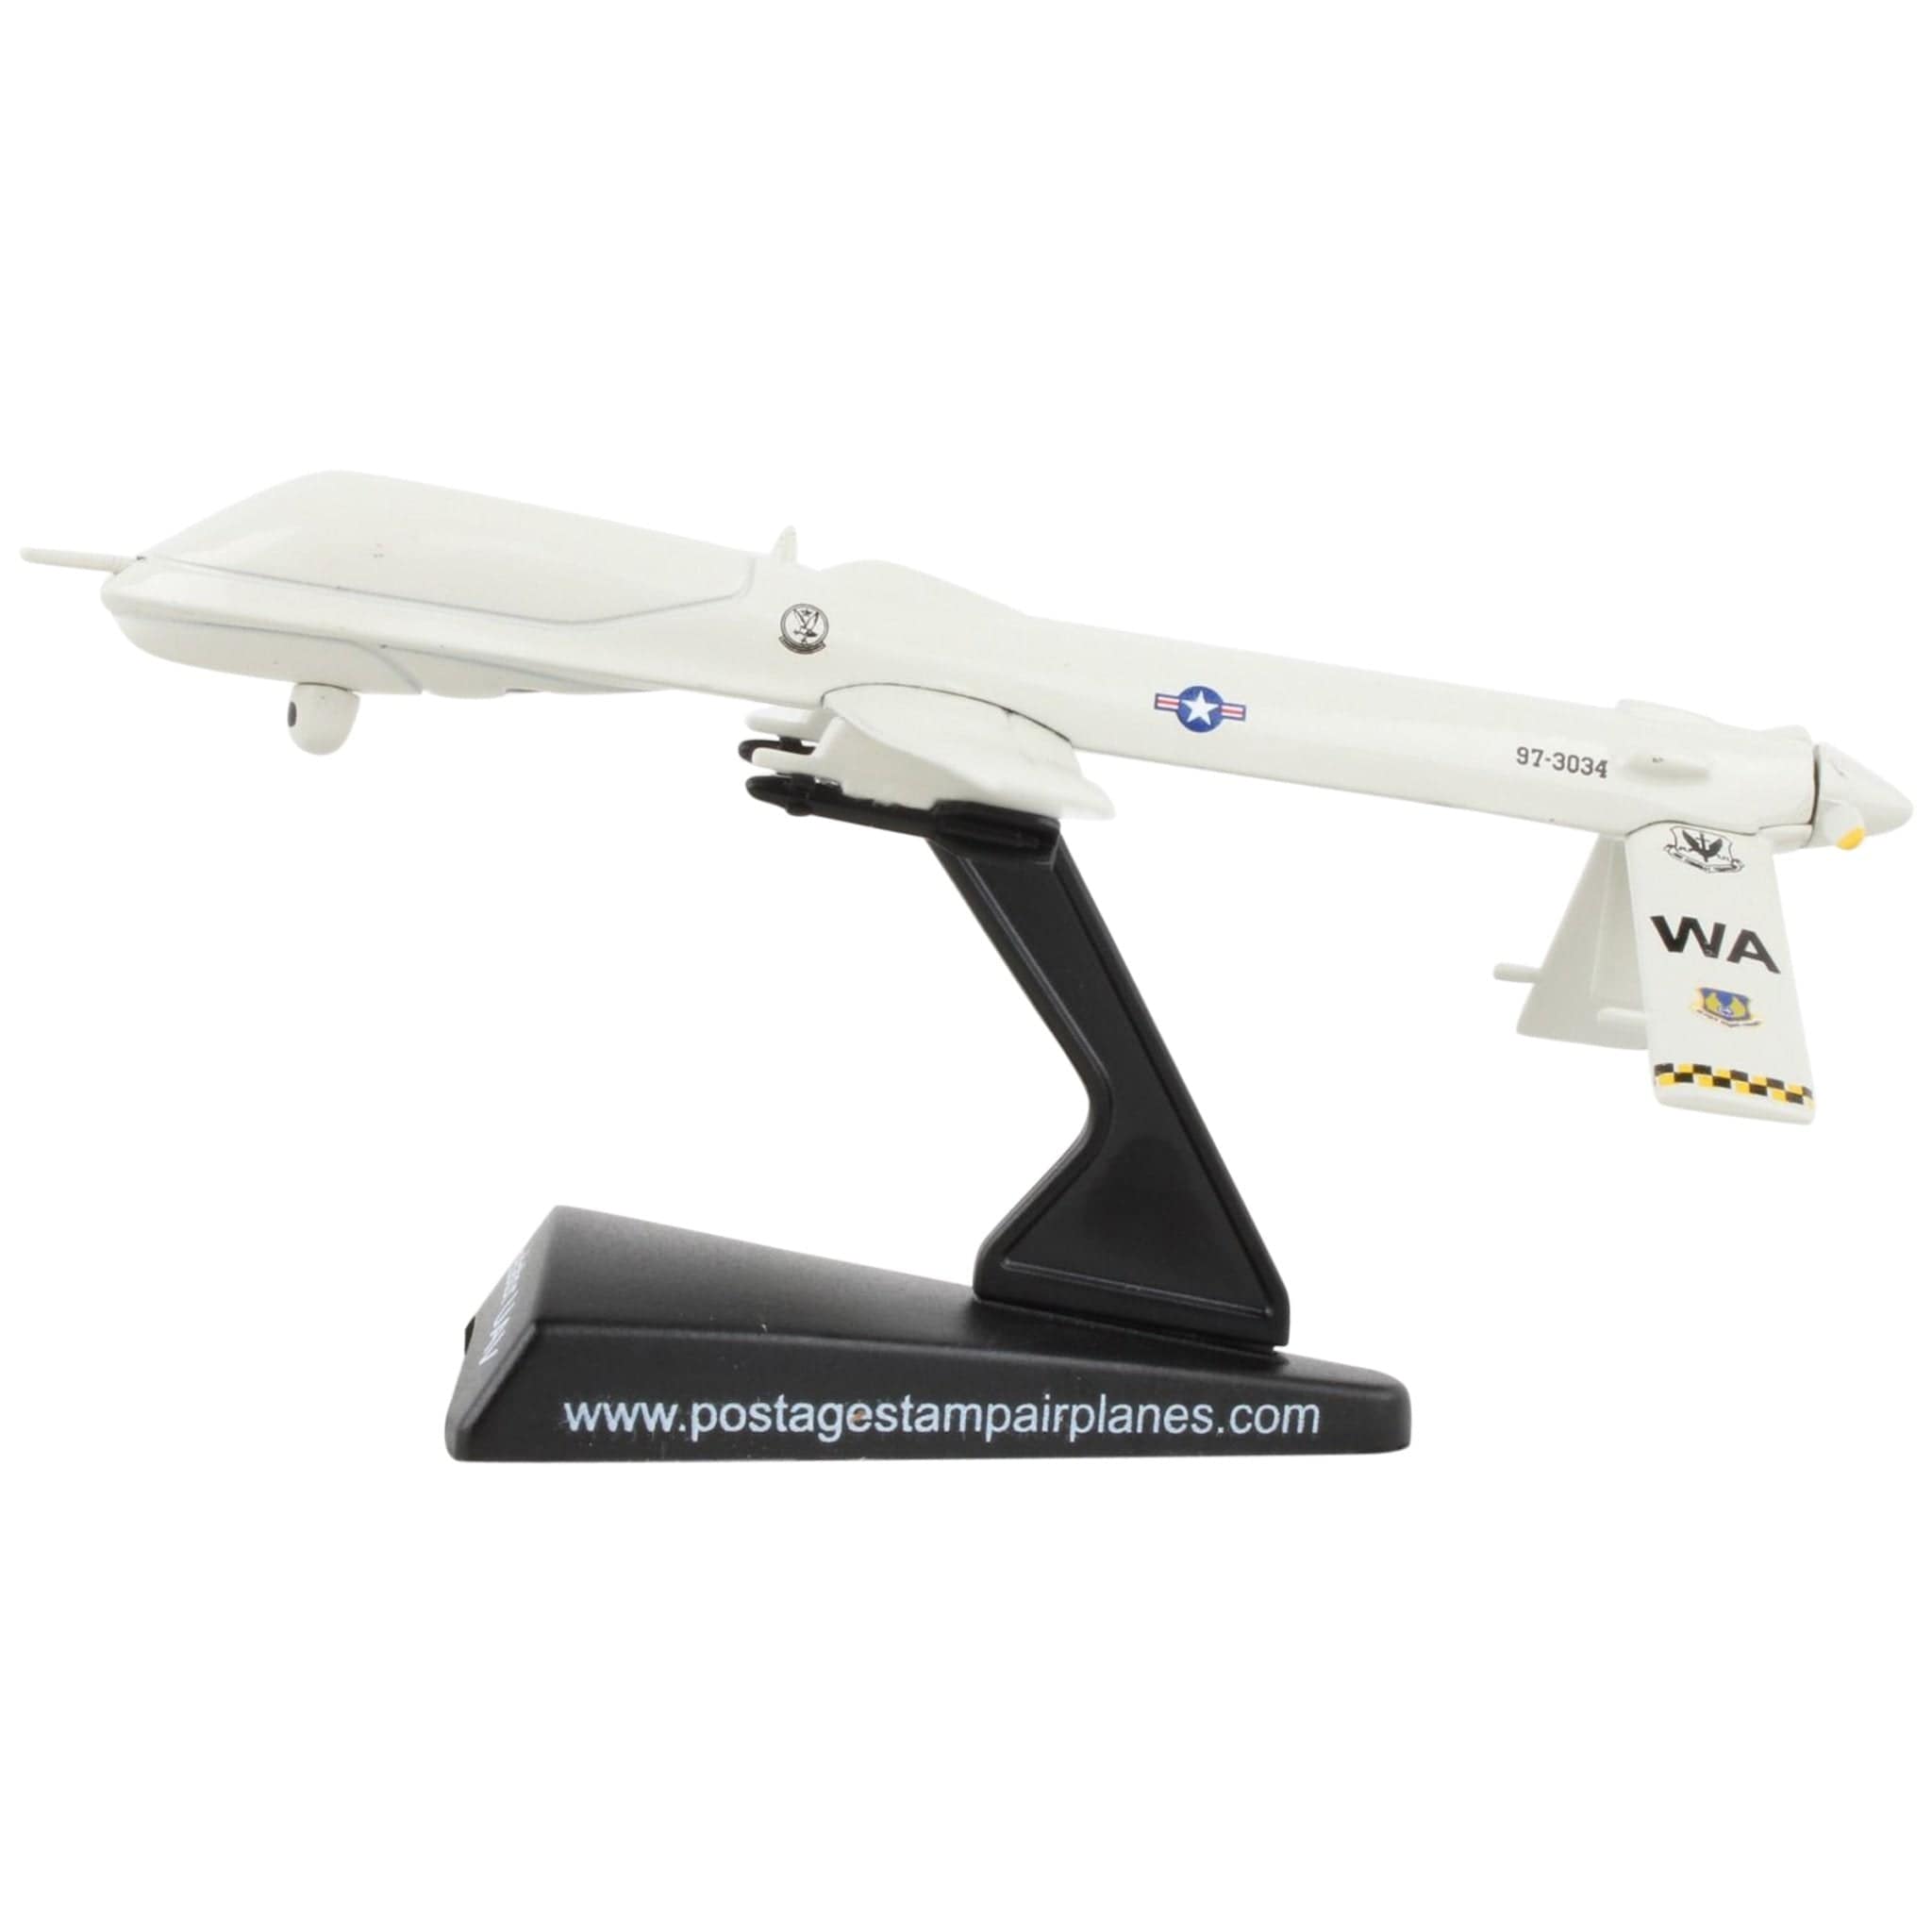 Postage Stamp RQ-1 USAF Predator UAV Drone w/Hellfire Missiles Die-Cast Metal Model Aircraft